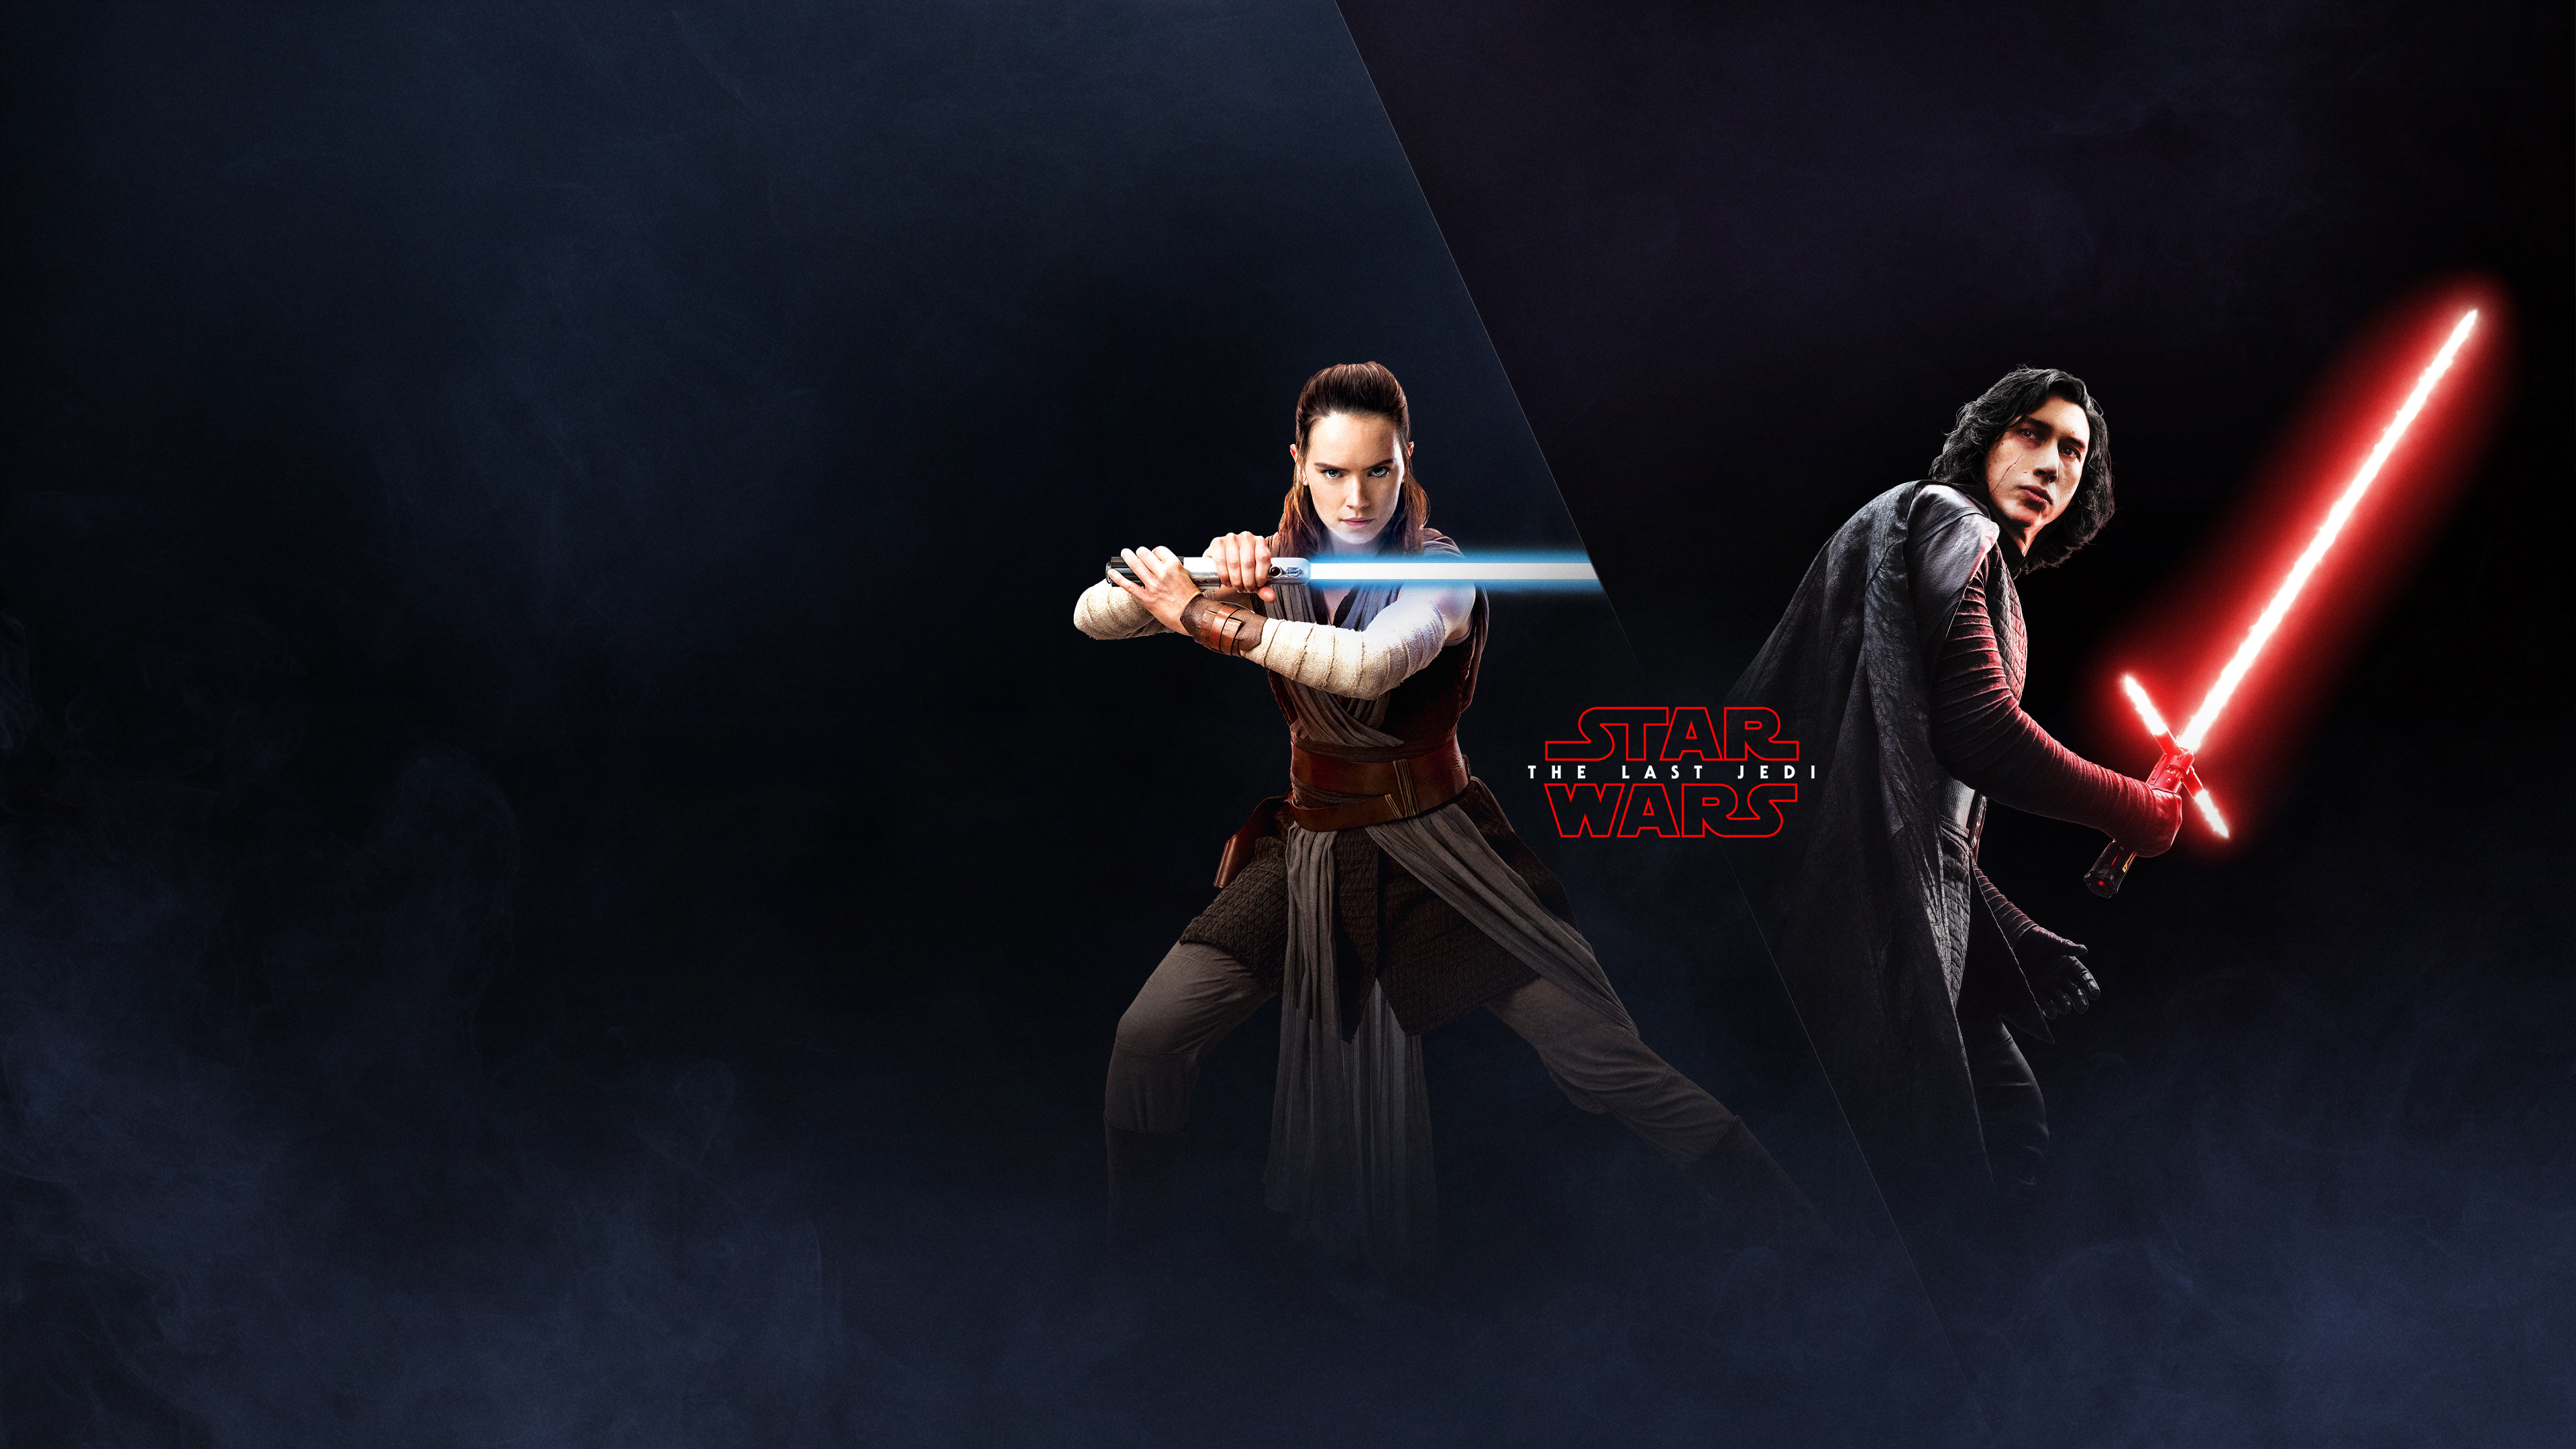 The Last Jedi Wallpaper Rey and Kylo Ren EA Battlefront 2 Poster